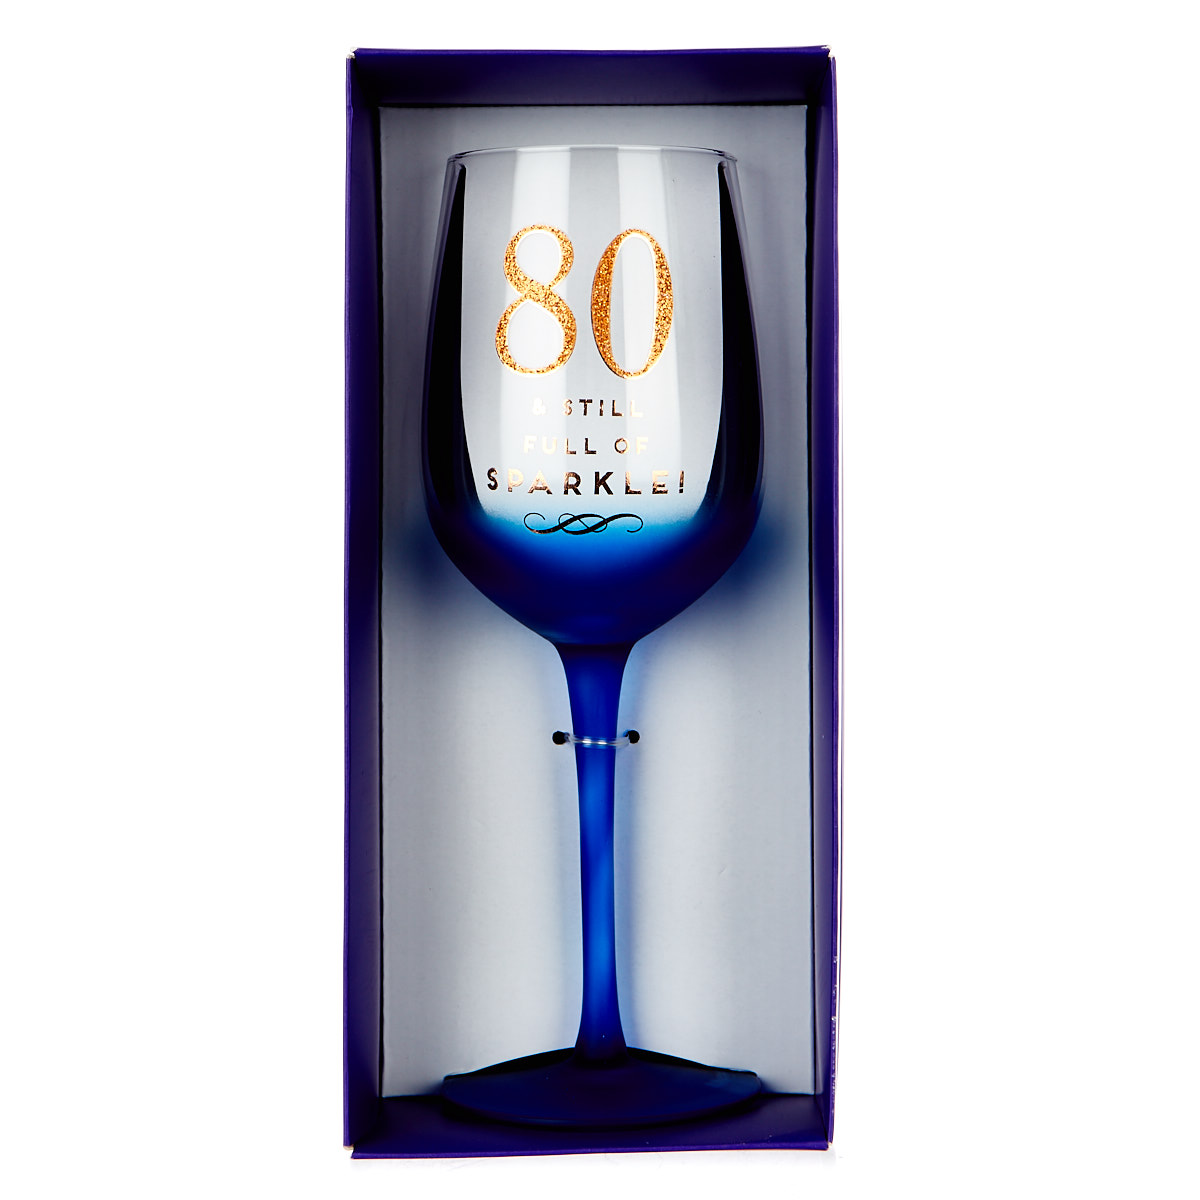 80th Birthday Wine Glass - Still Full Of Sparkle